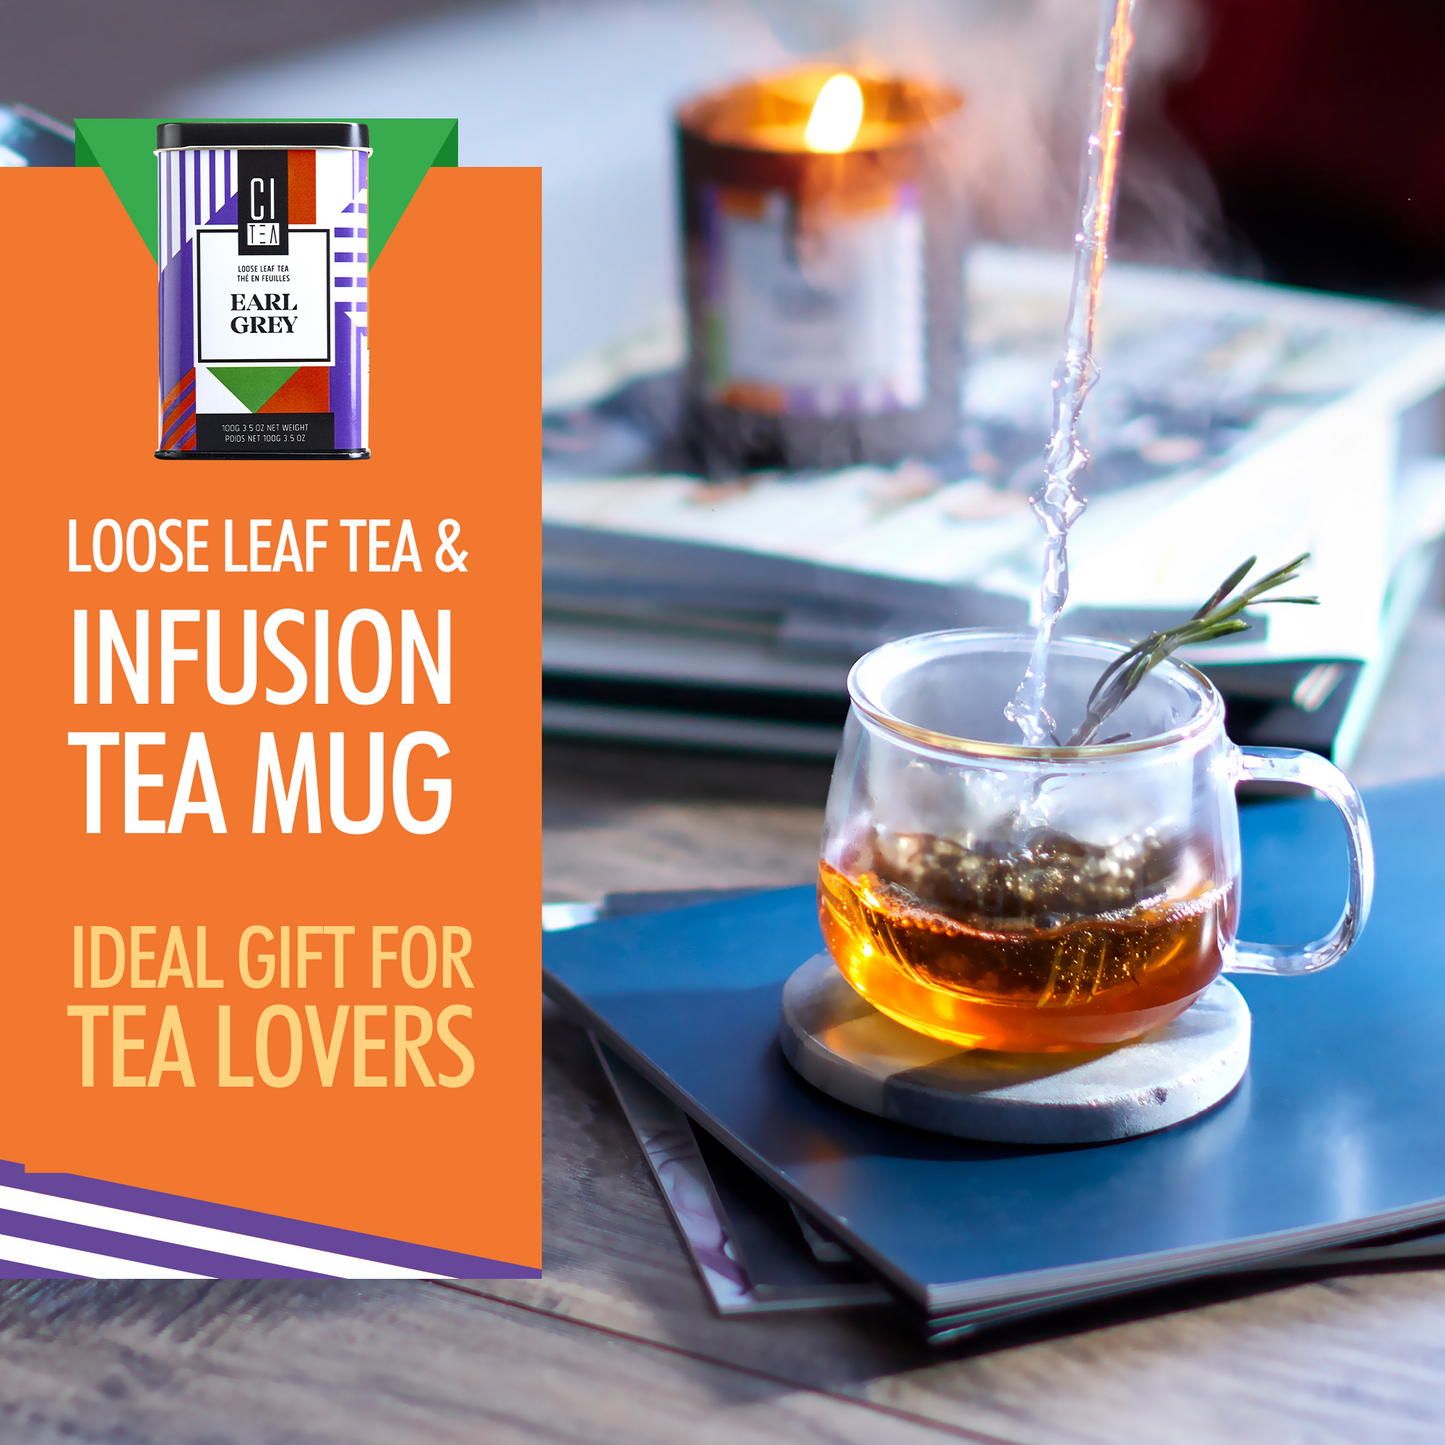 Earl Grey Loose Tea & Infusion Teacup Gift Set